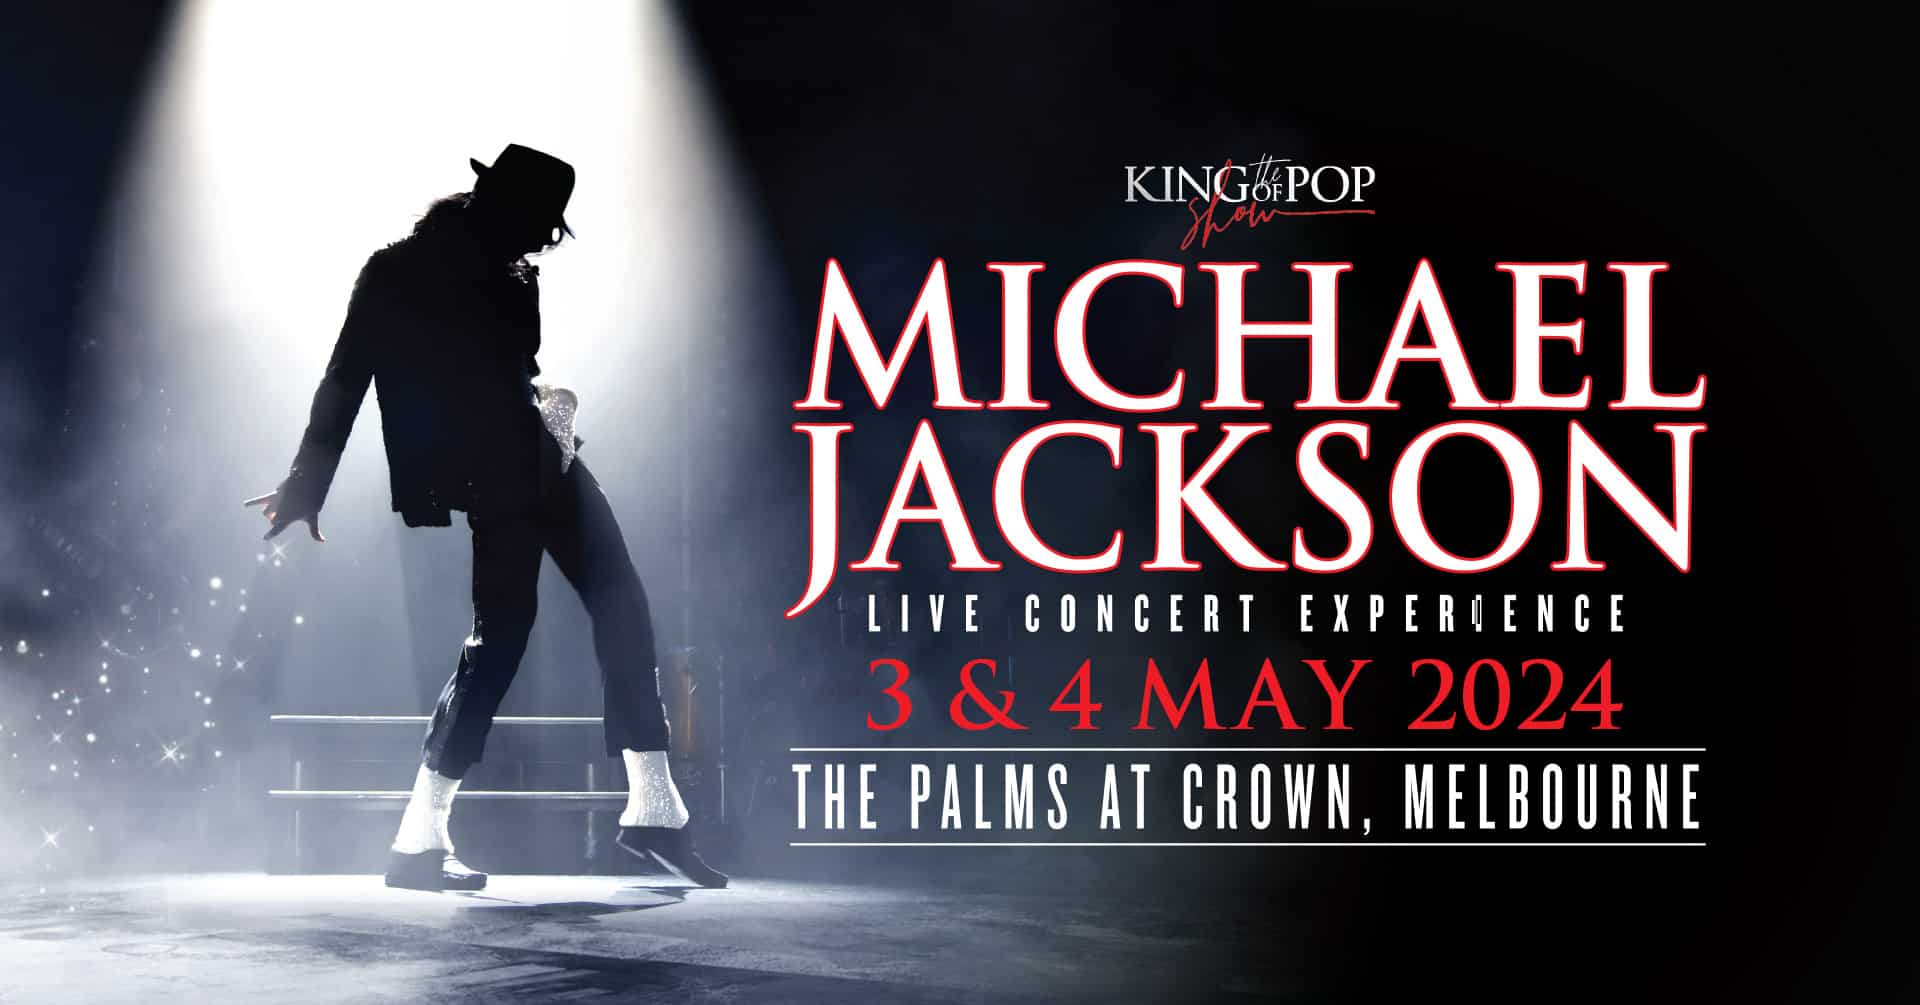 TJ Michael Jackson - The King of Pop Show